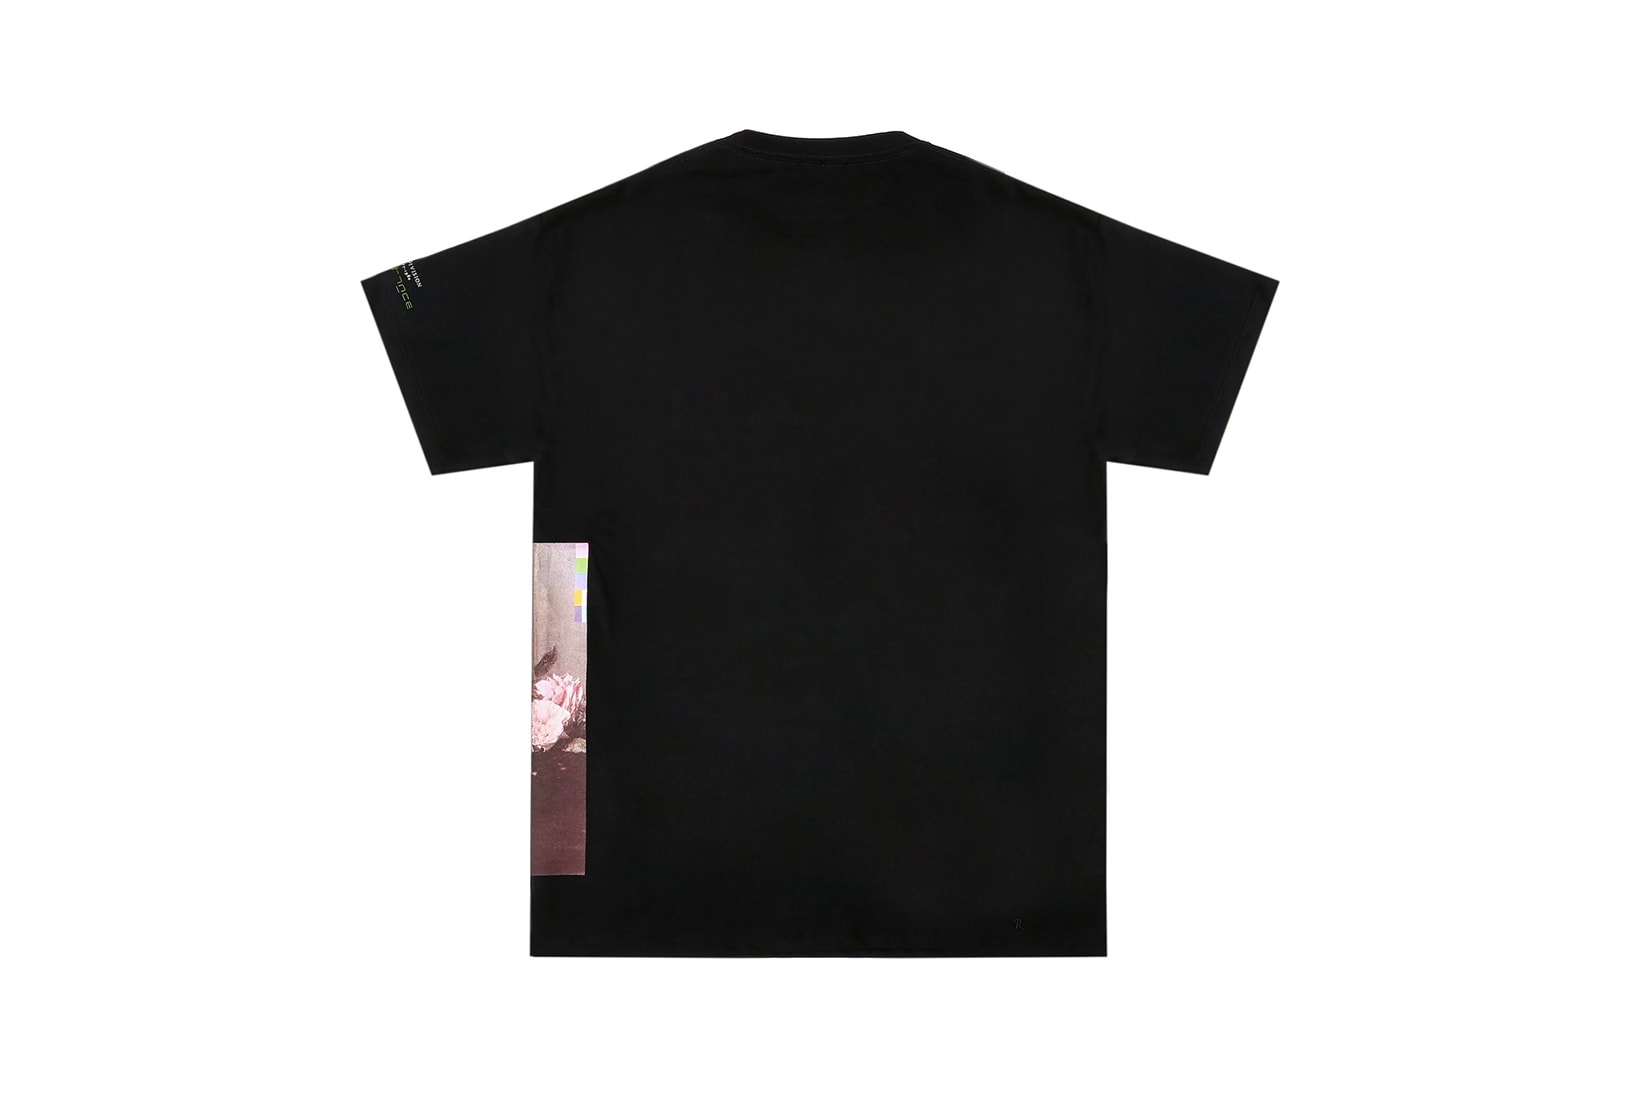 Raf Simons Joy Division New Order Ian Curtis Peter Saville Dover Street Market T-shirts Tees